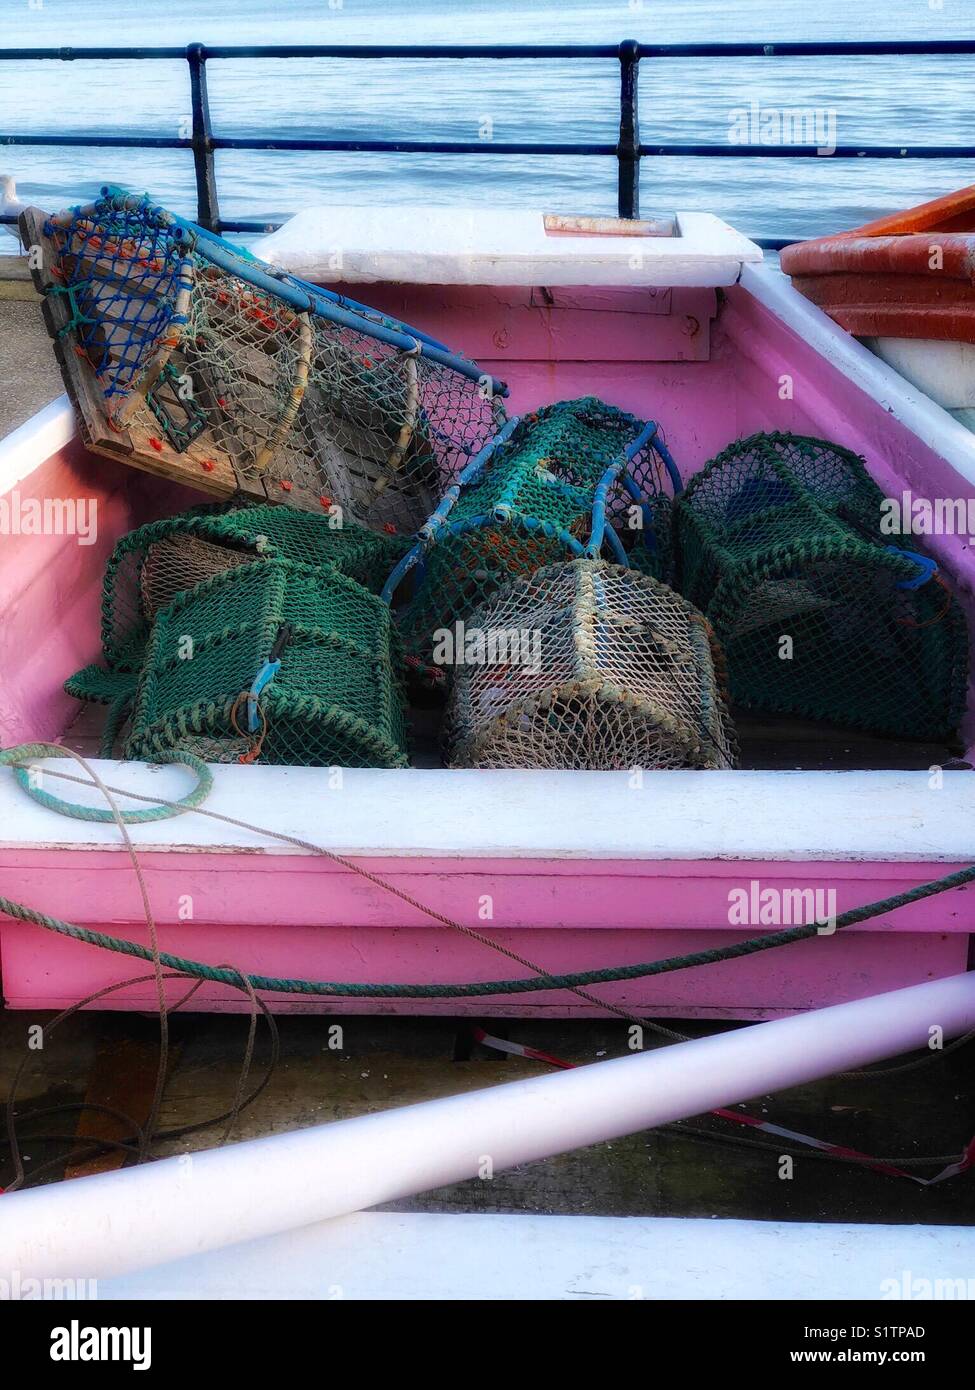 https://c8.alamy.com/comp/S1TPAD/6-lobster-pots-in-a-pink-fishing-boat-S1TPAD.jpg